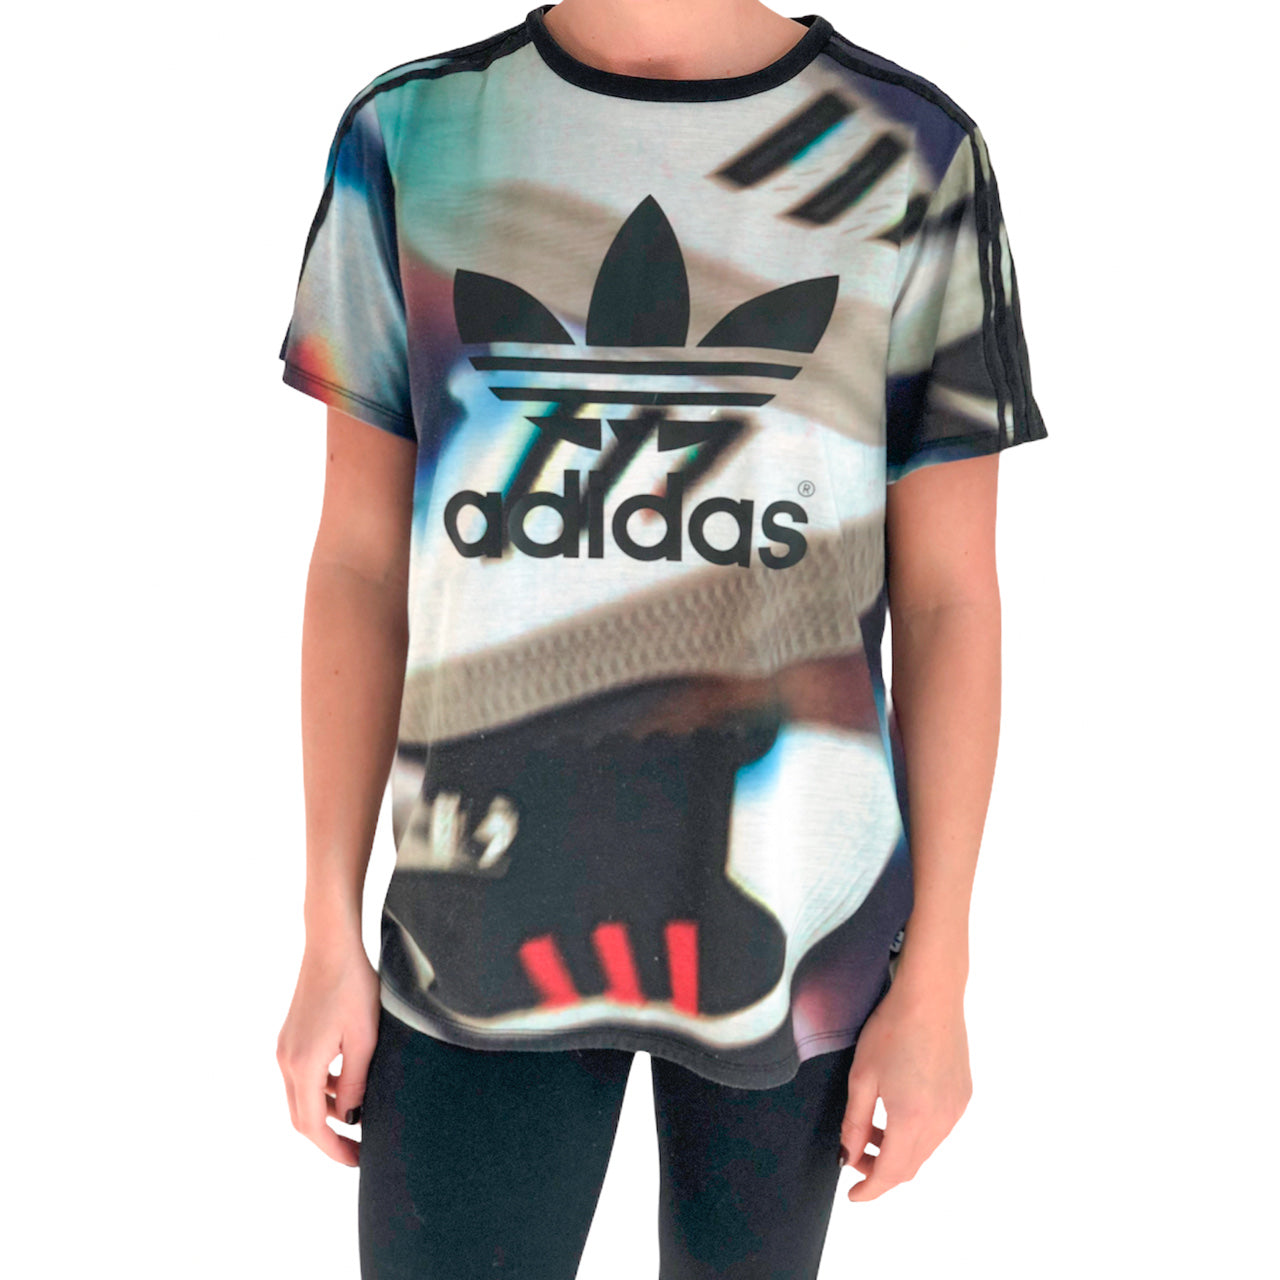 Adidas Patterned T Shirt